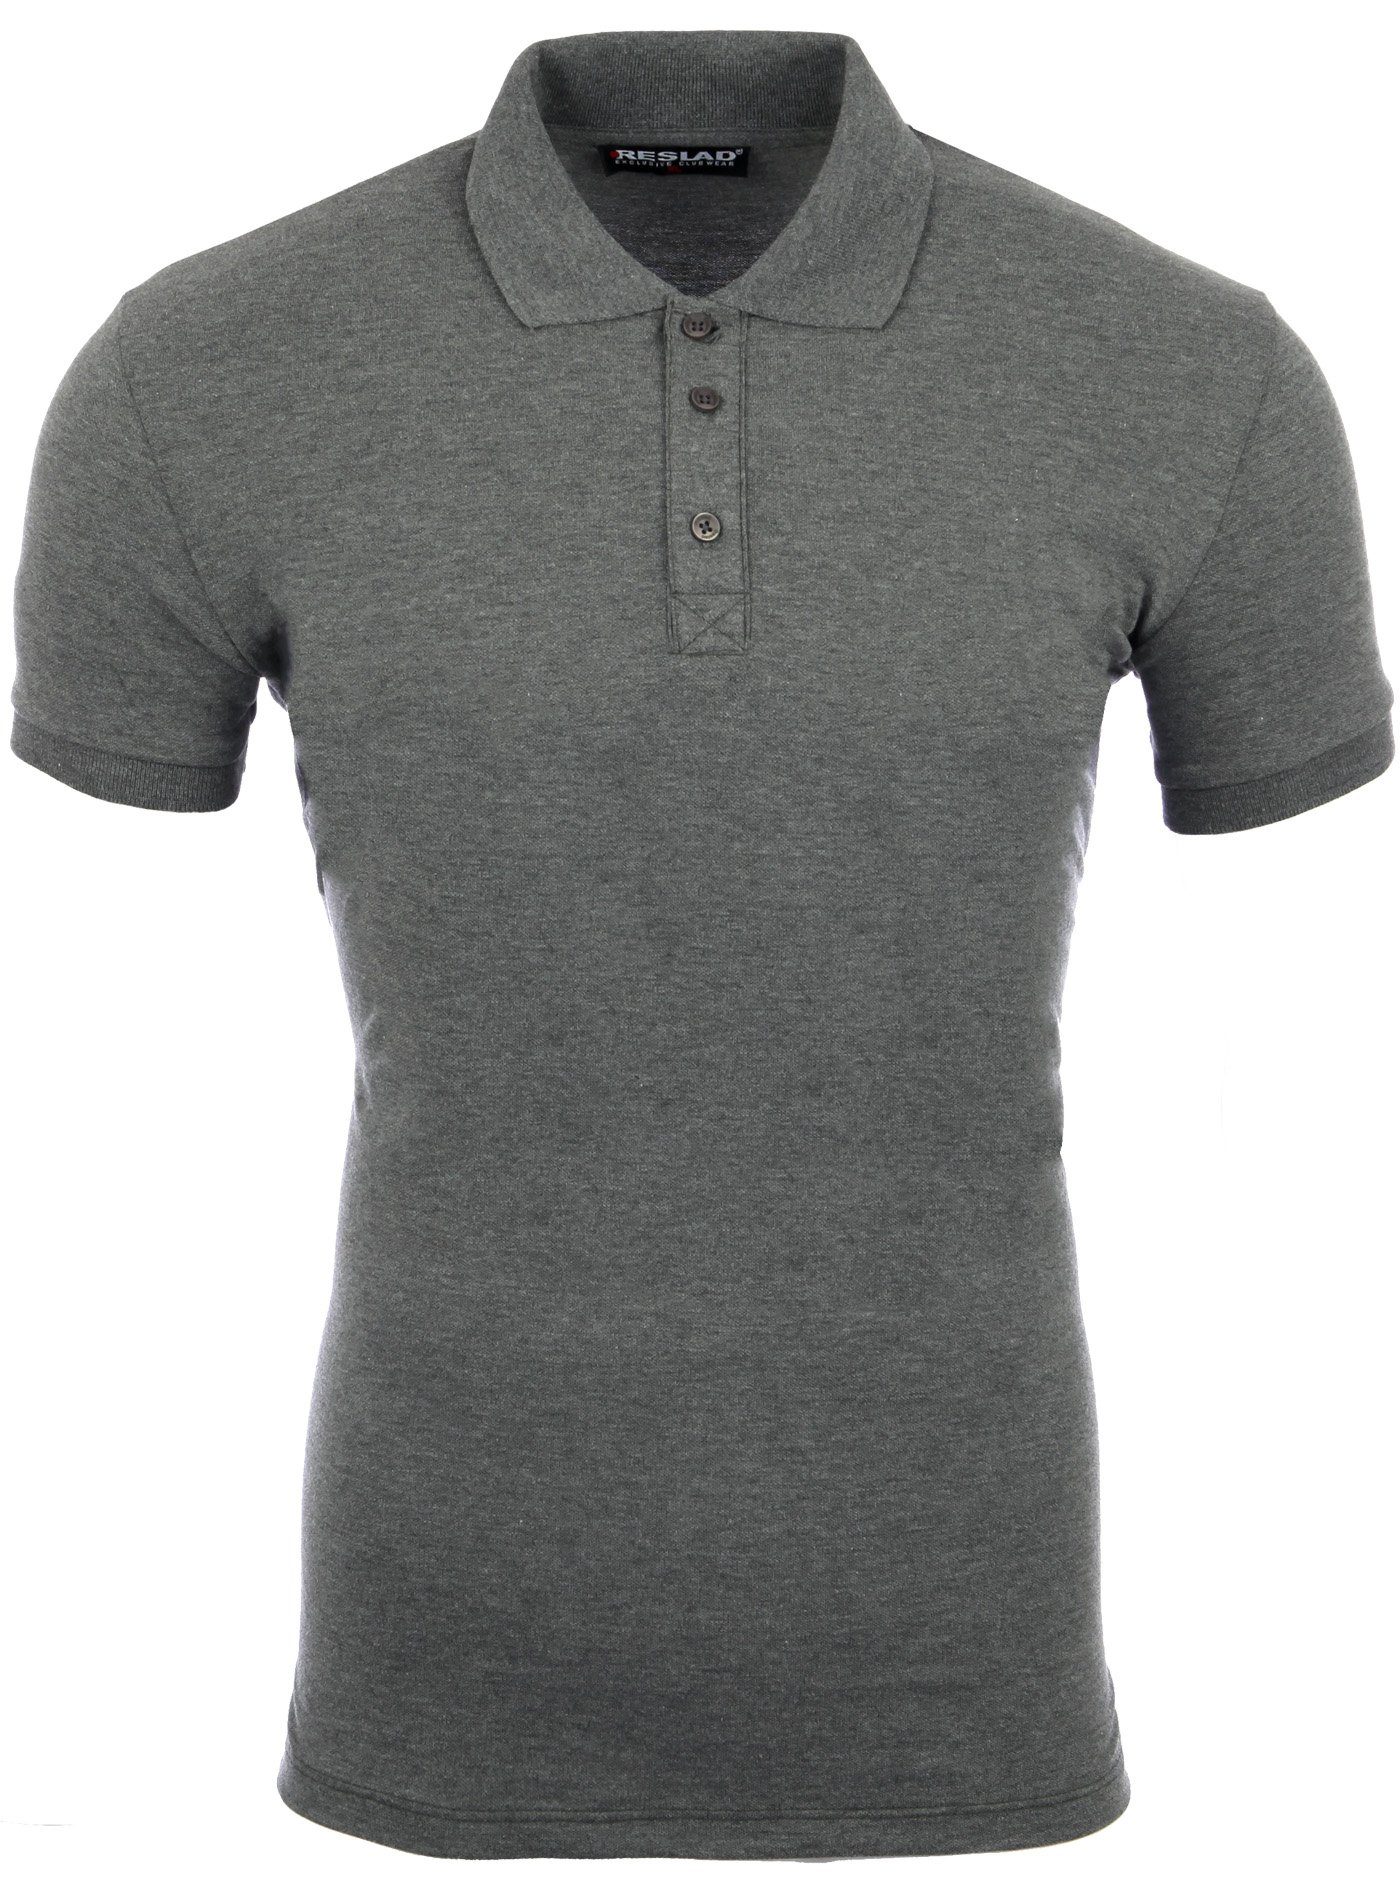 Kickdown Poloshirt Herren Slim Fit Club Wear Kontrast T-Shirt K-1924 SALE! 